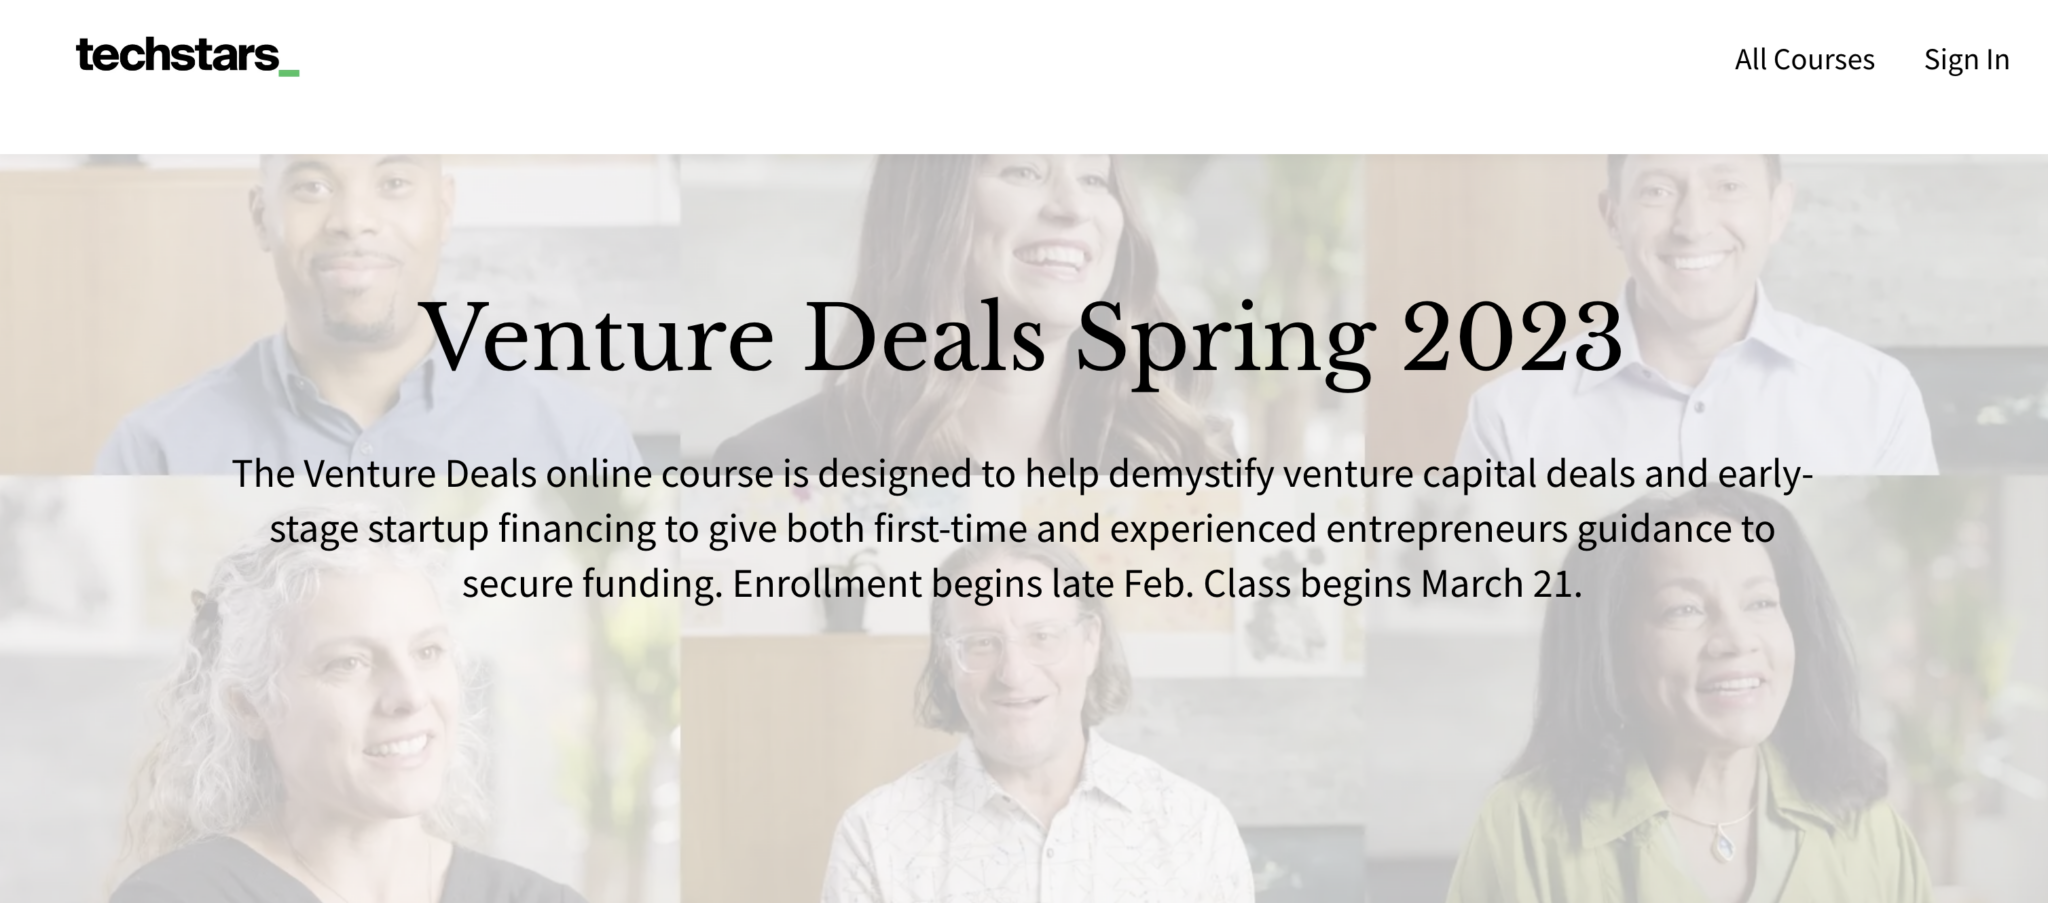 Venture Deals Spring 2023 Course